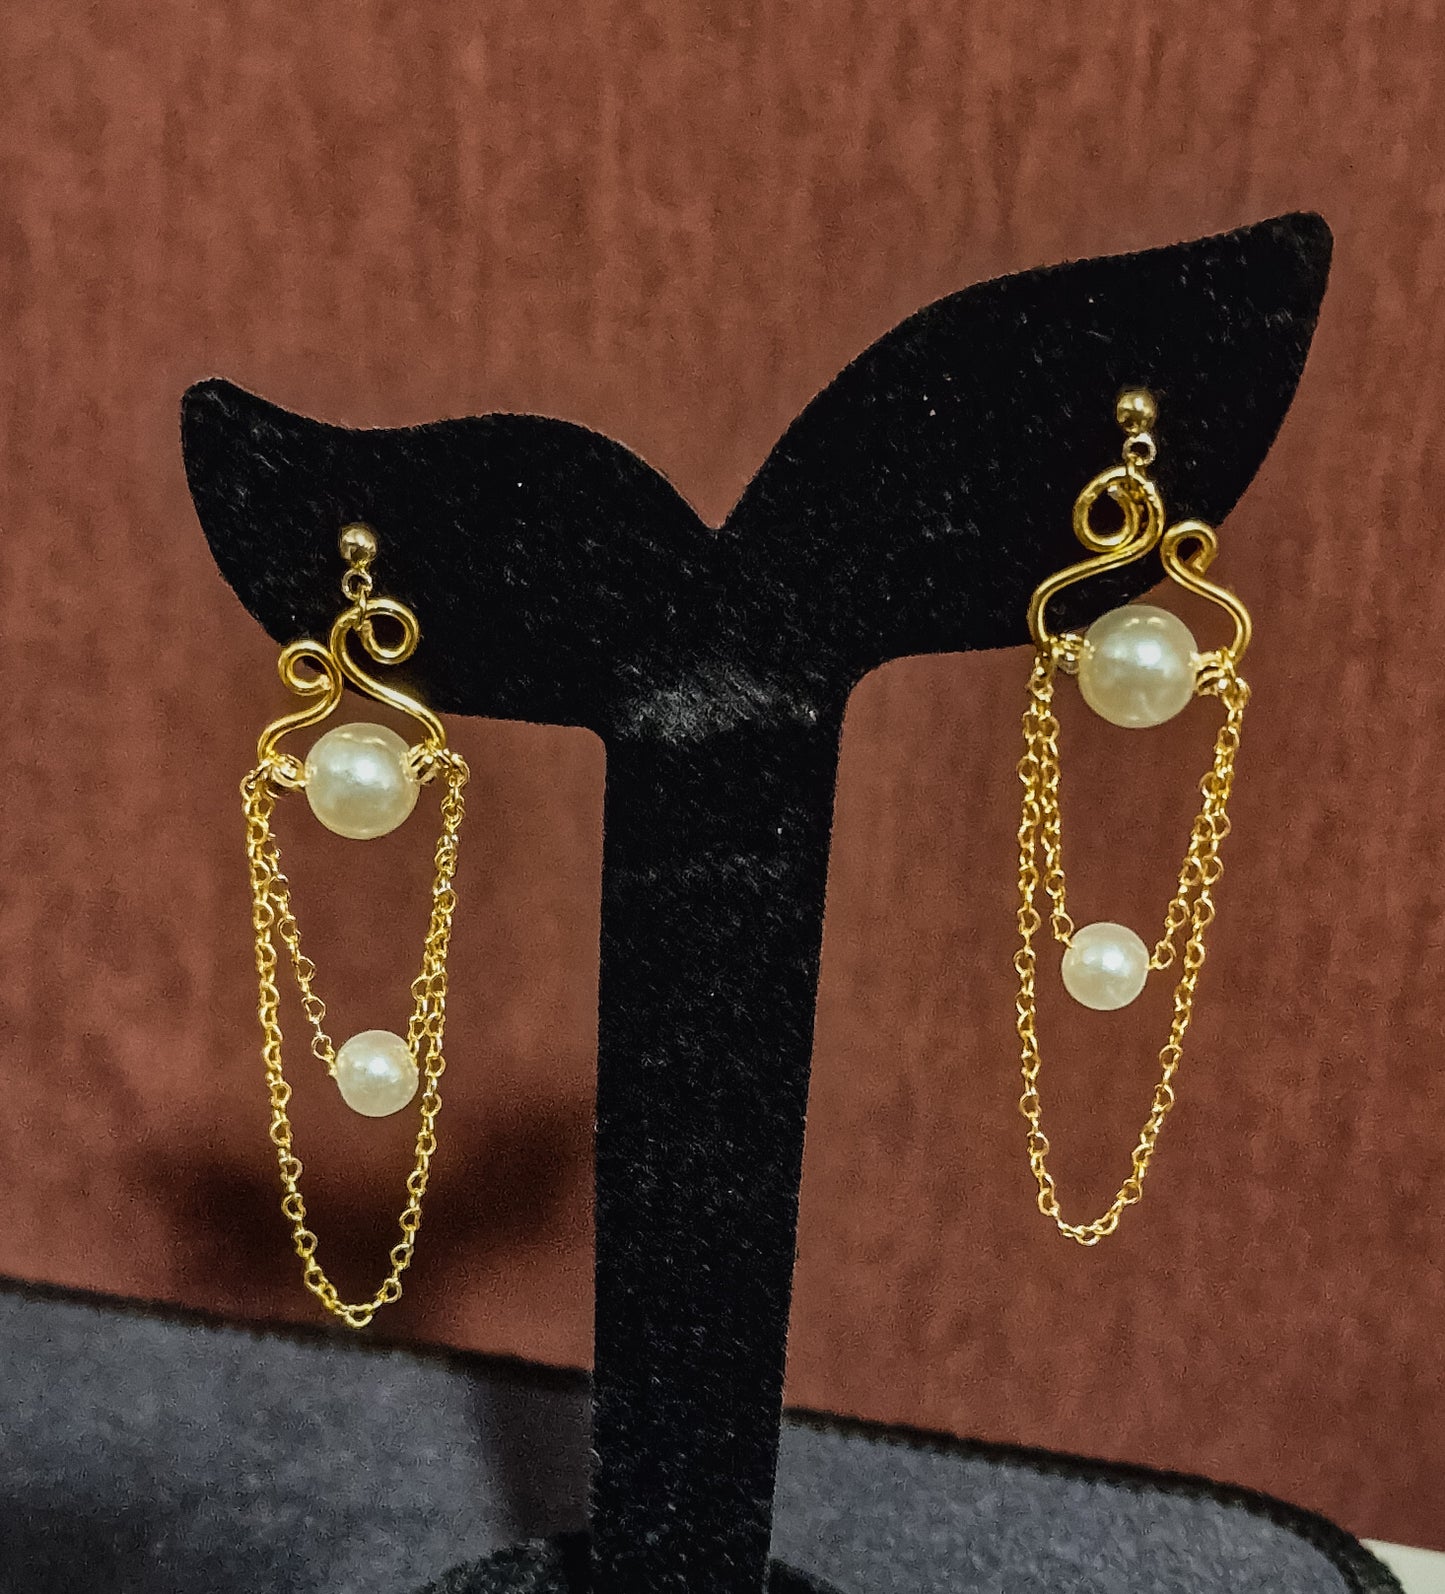 Unique earrings